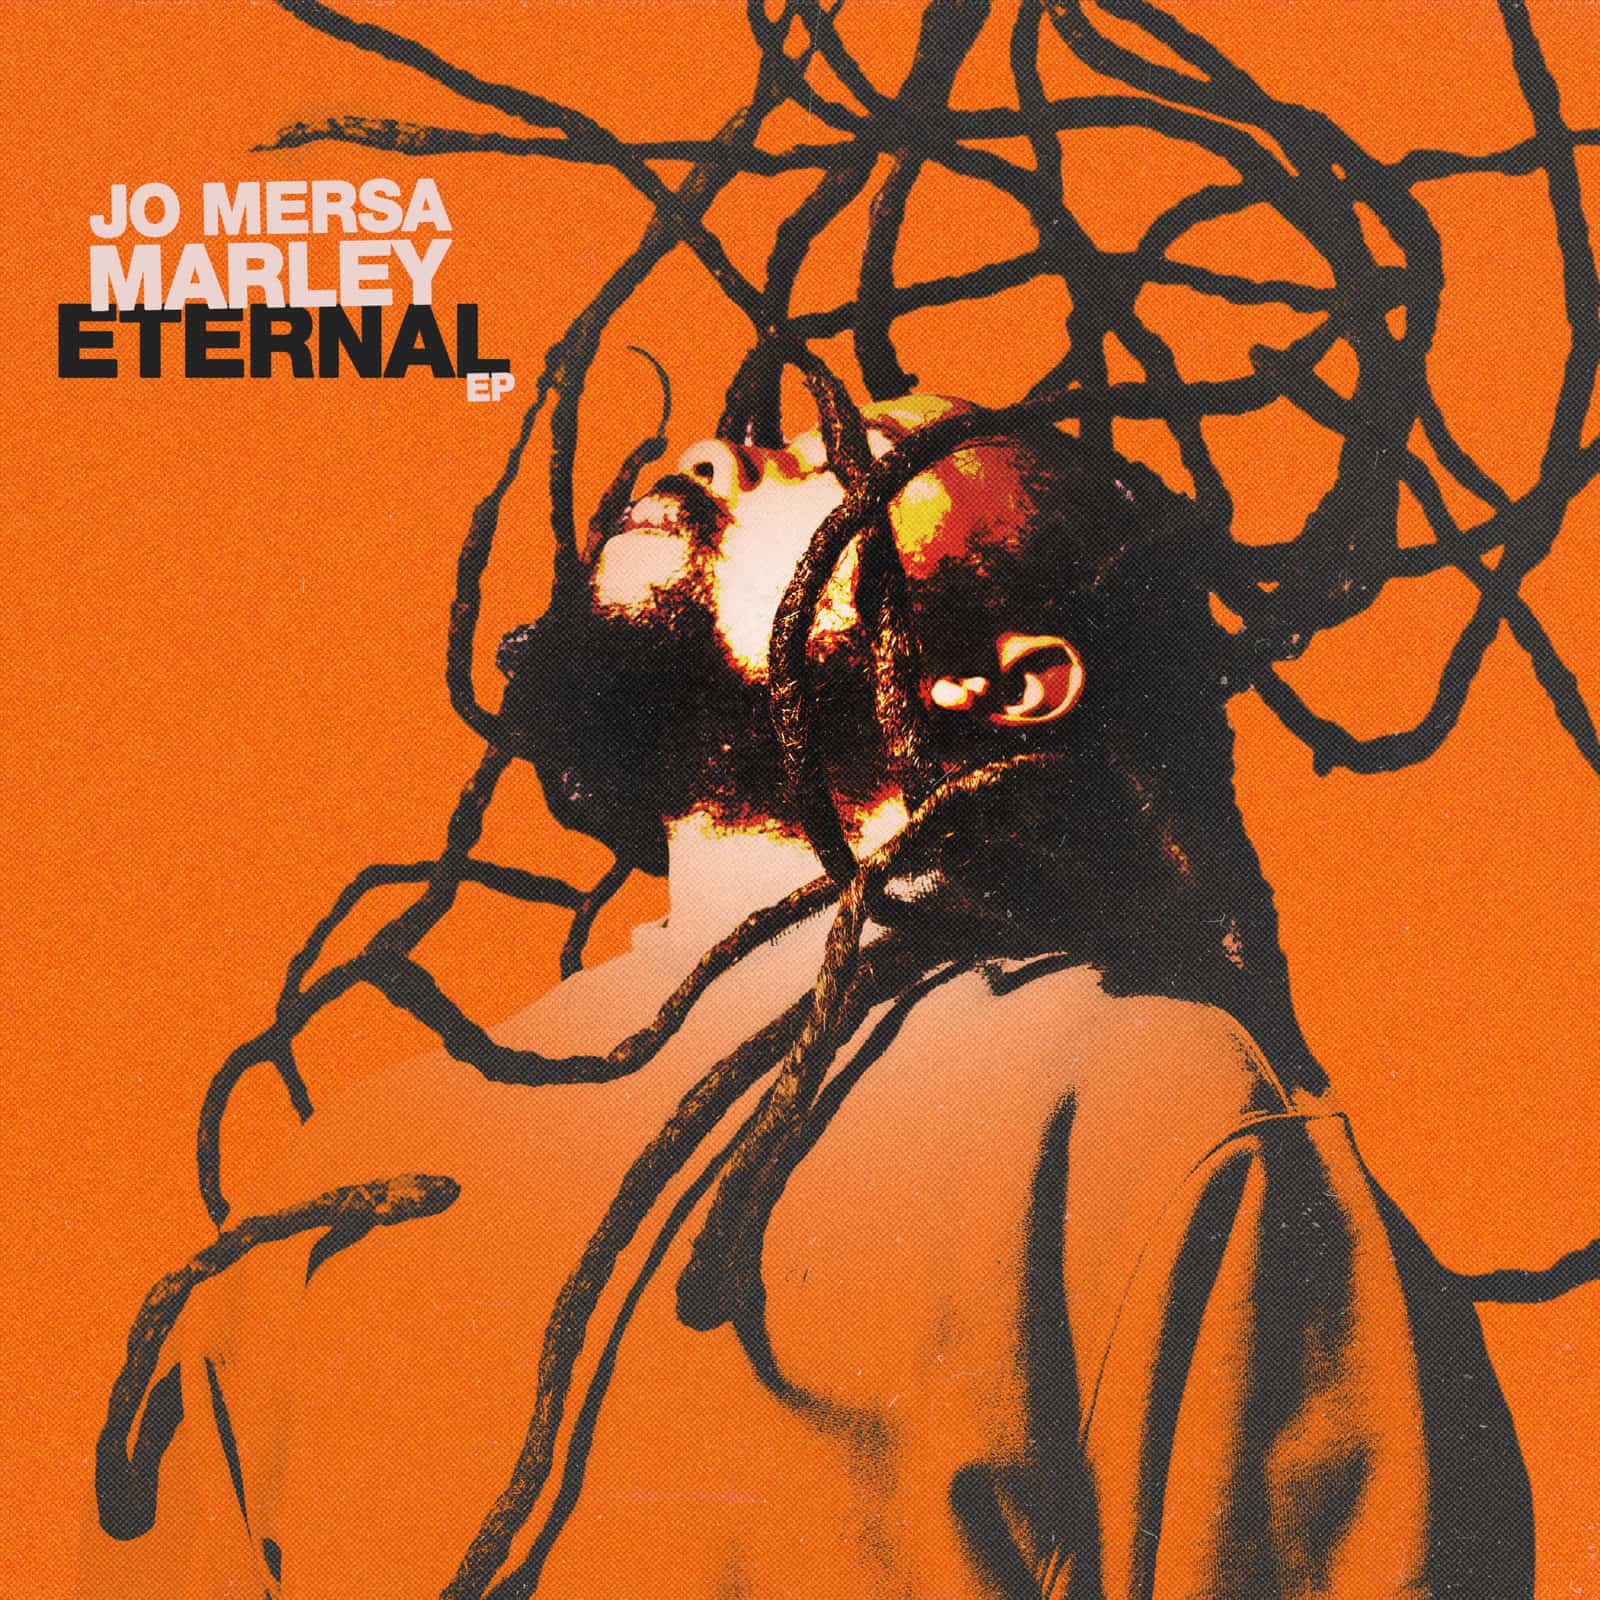 Jo Mersa Marley- Eternal EP - Ghetto Youths International